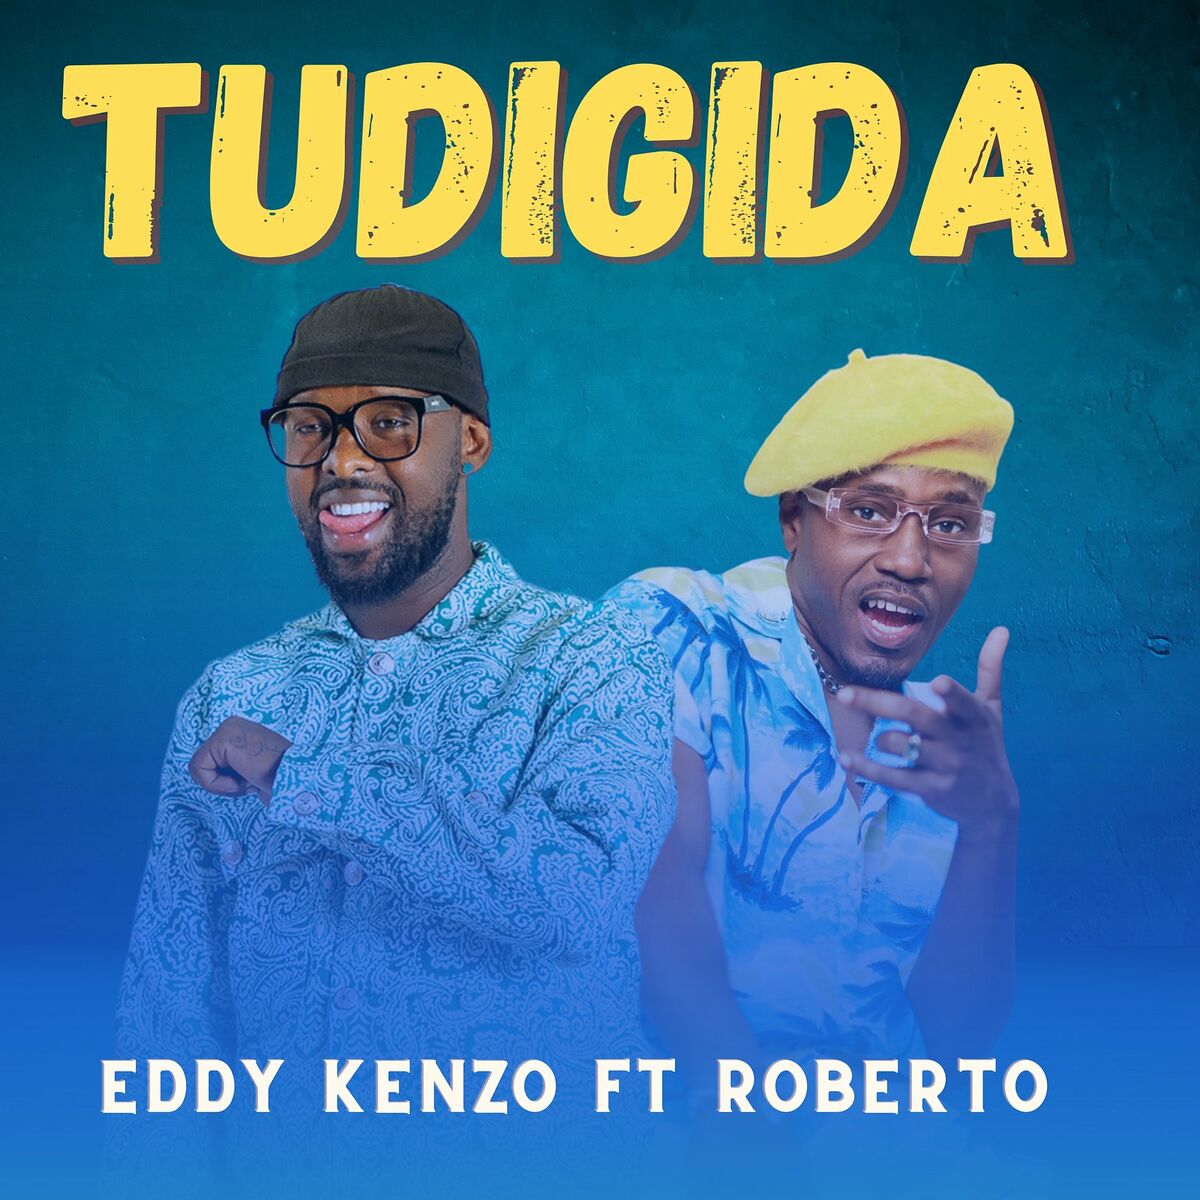 Eddy Kenzo Ft Roberto Tudigida Mp3 Download